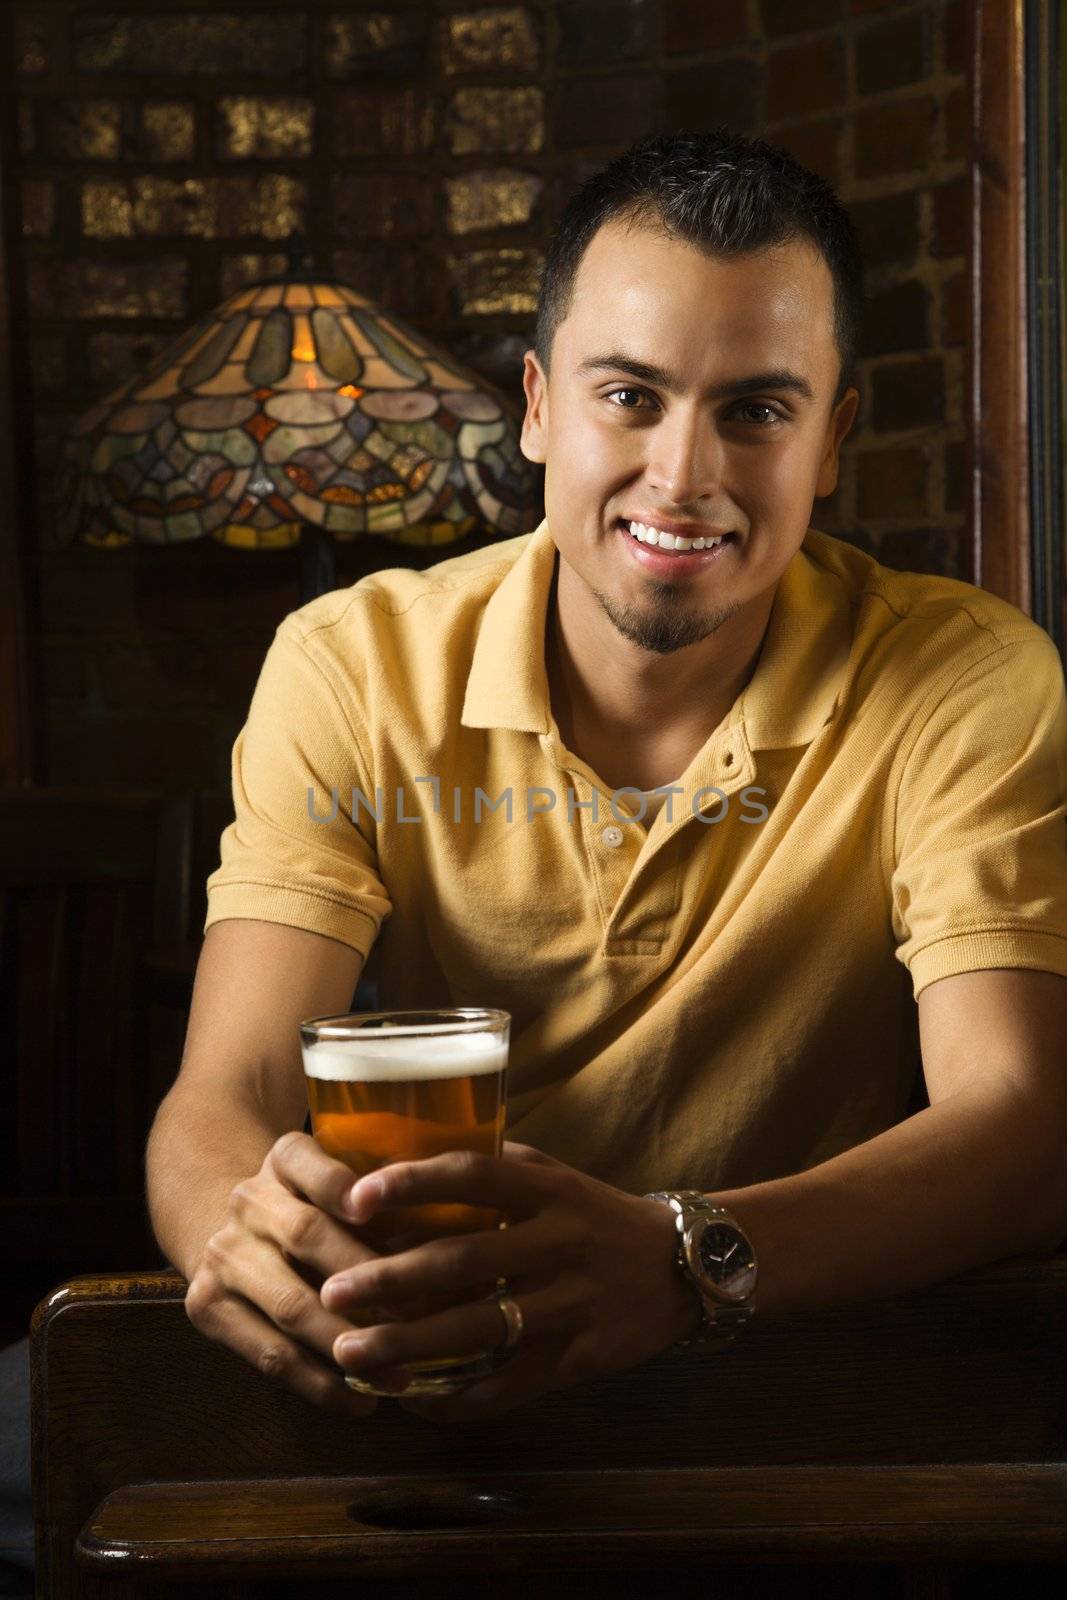 Man at bar smiling. by iofoto